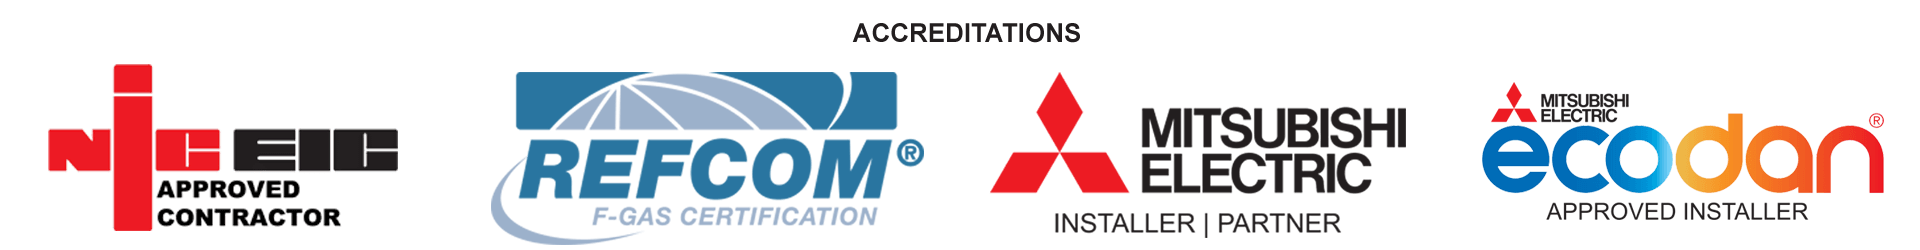 AEM Solutions Accreditations